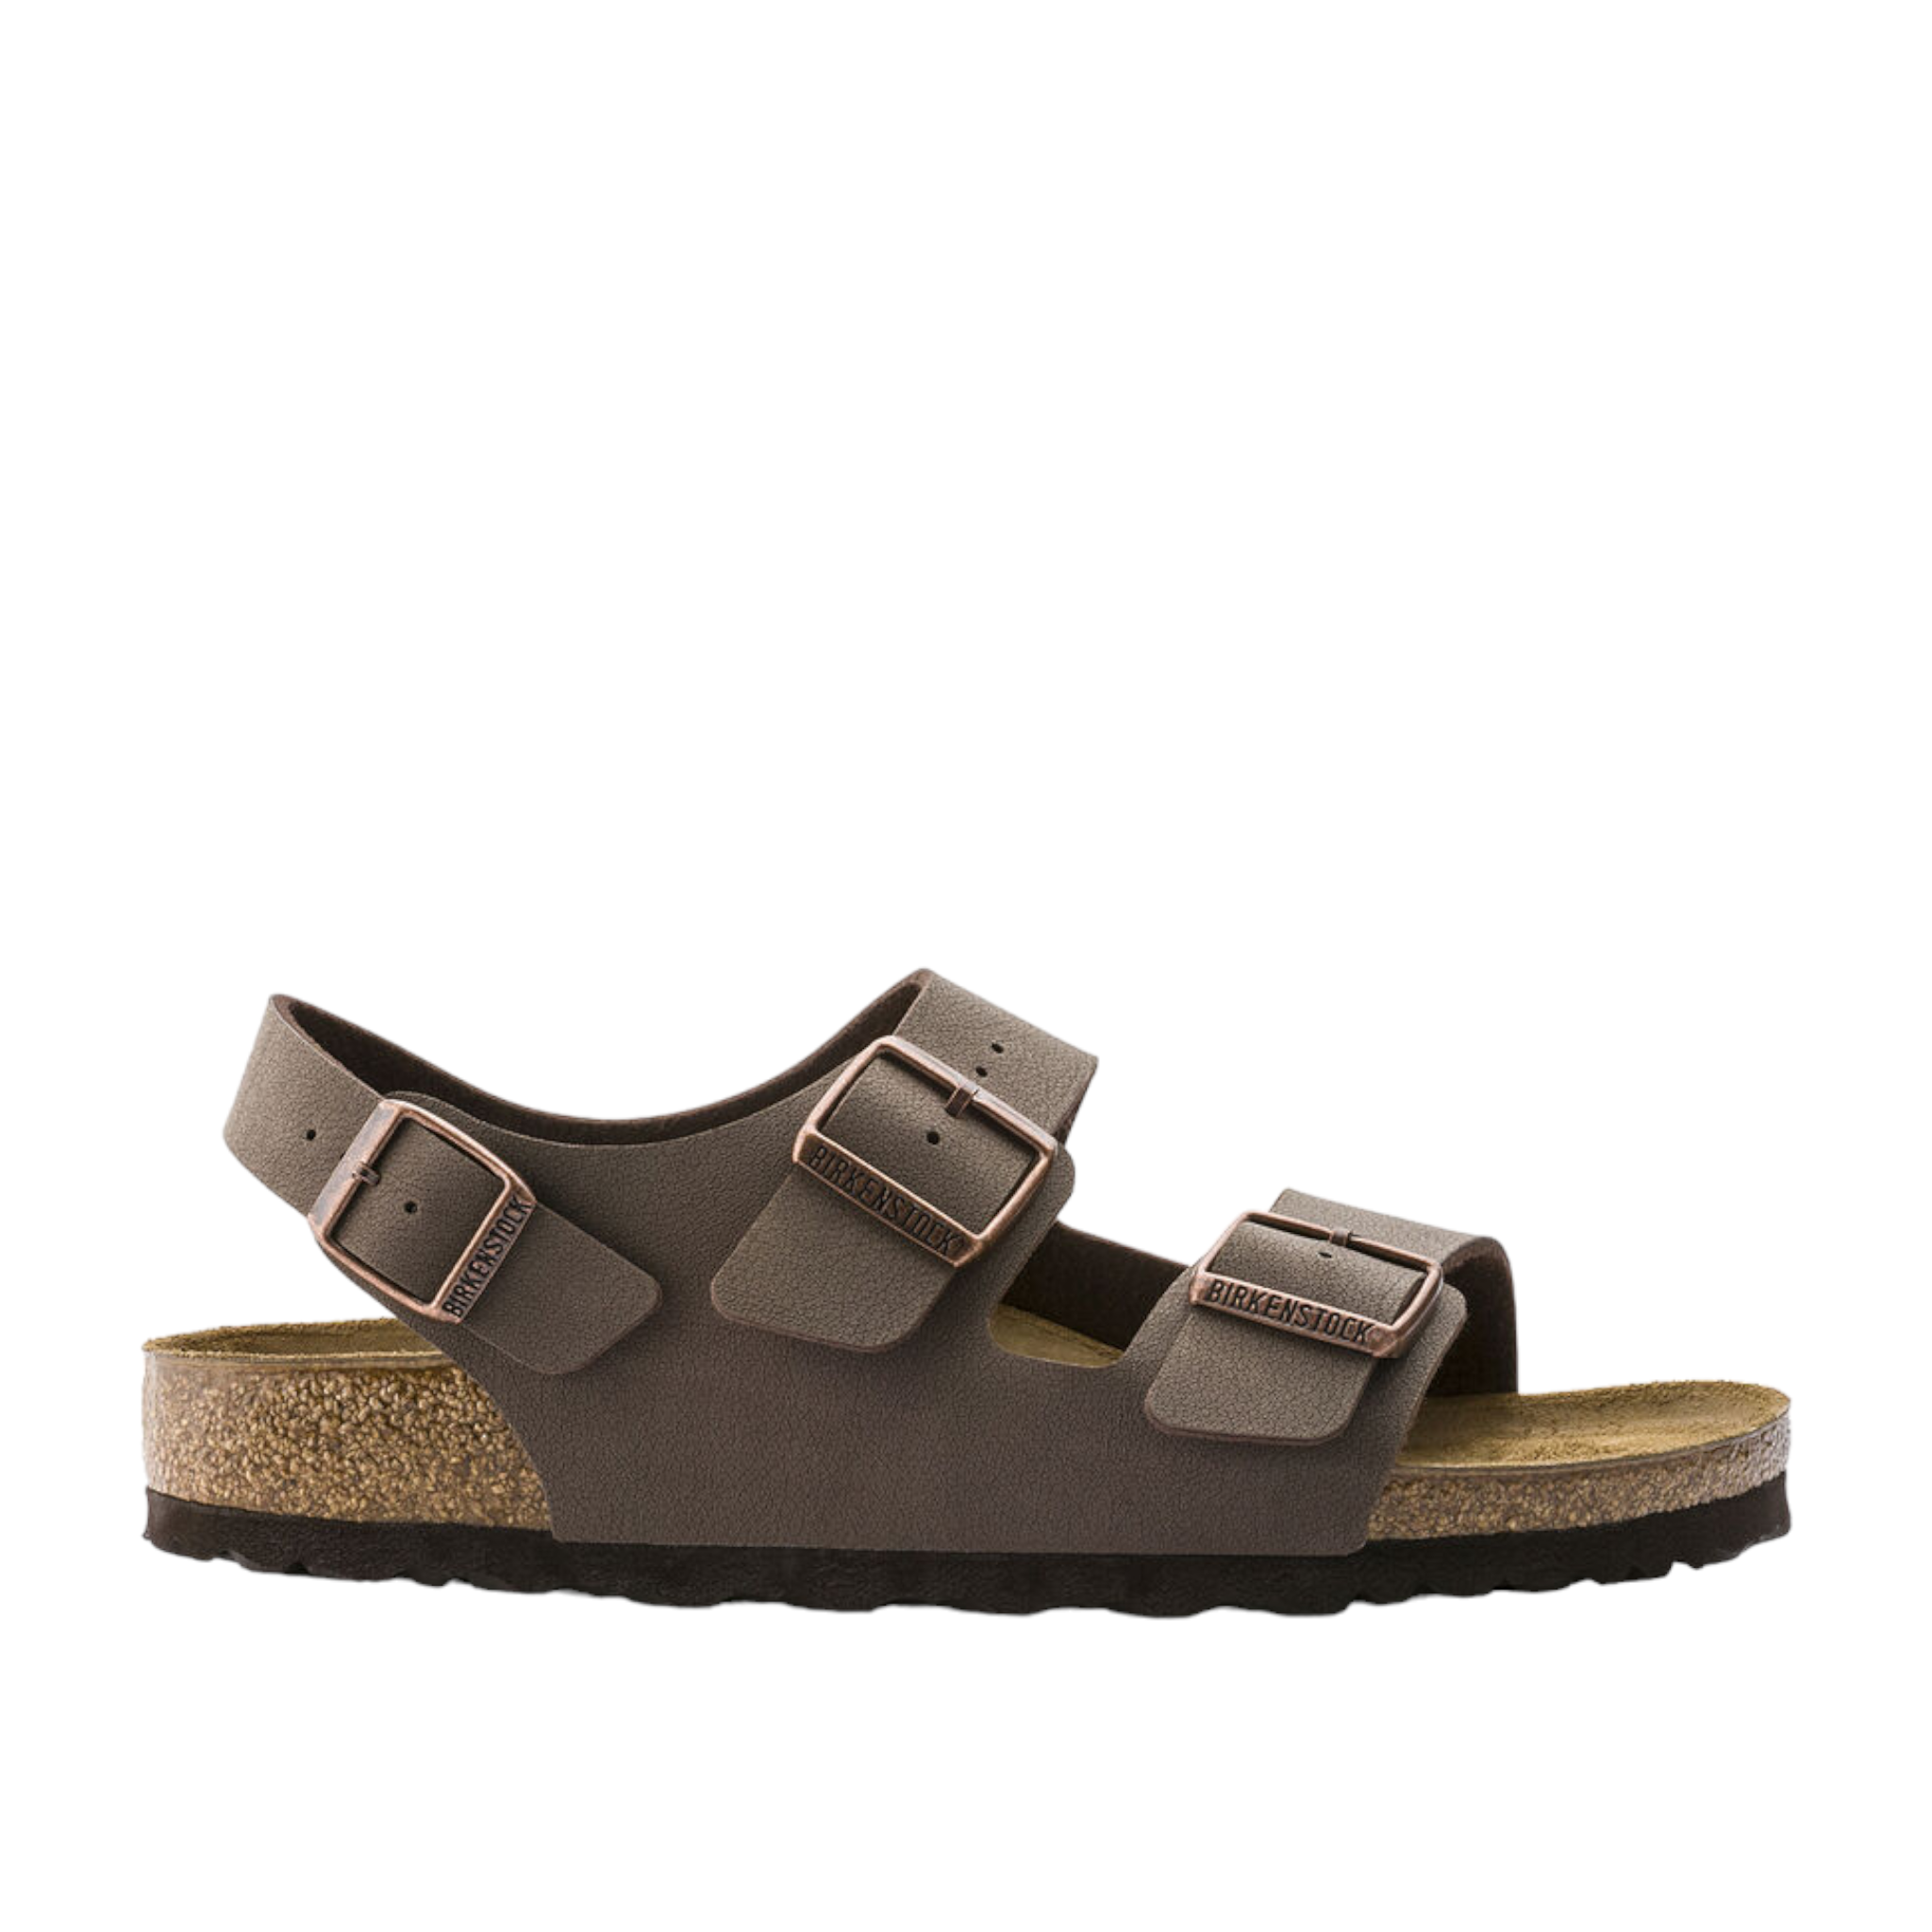 Milano Birkibuc - shoe&me - Birkenstock - Sandal - Mens, Sandals, Summer, Womens